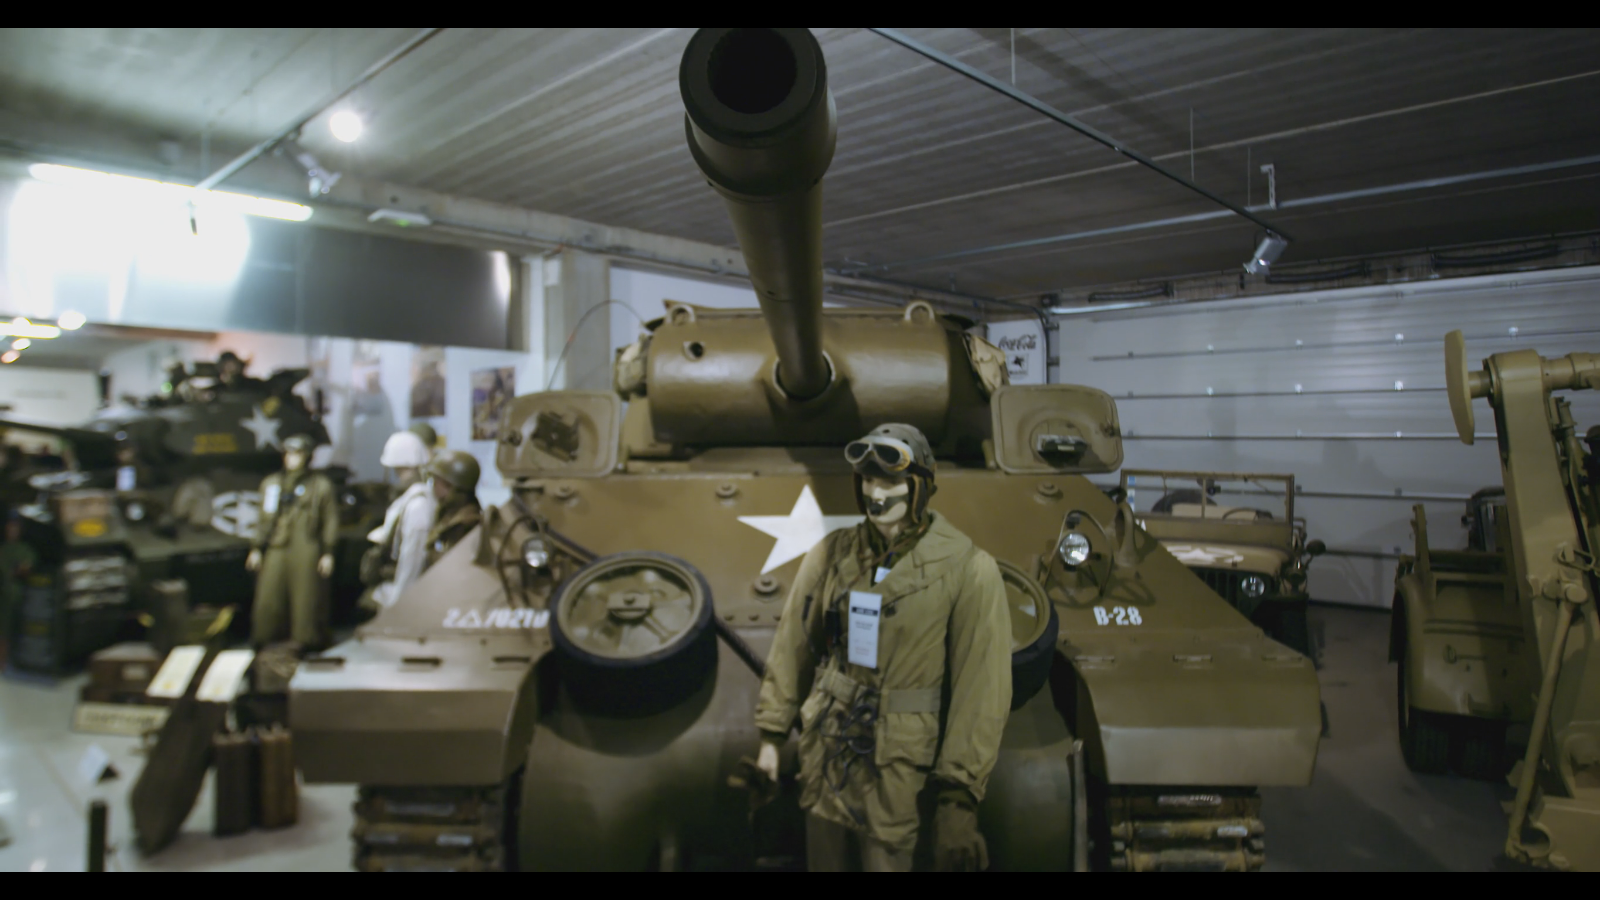 military tank inside